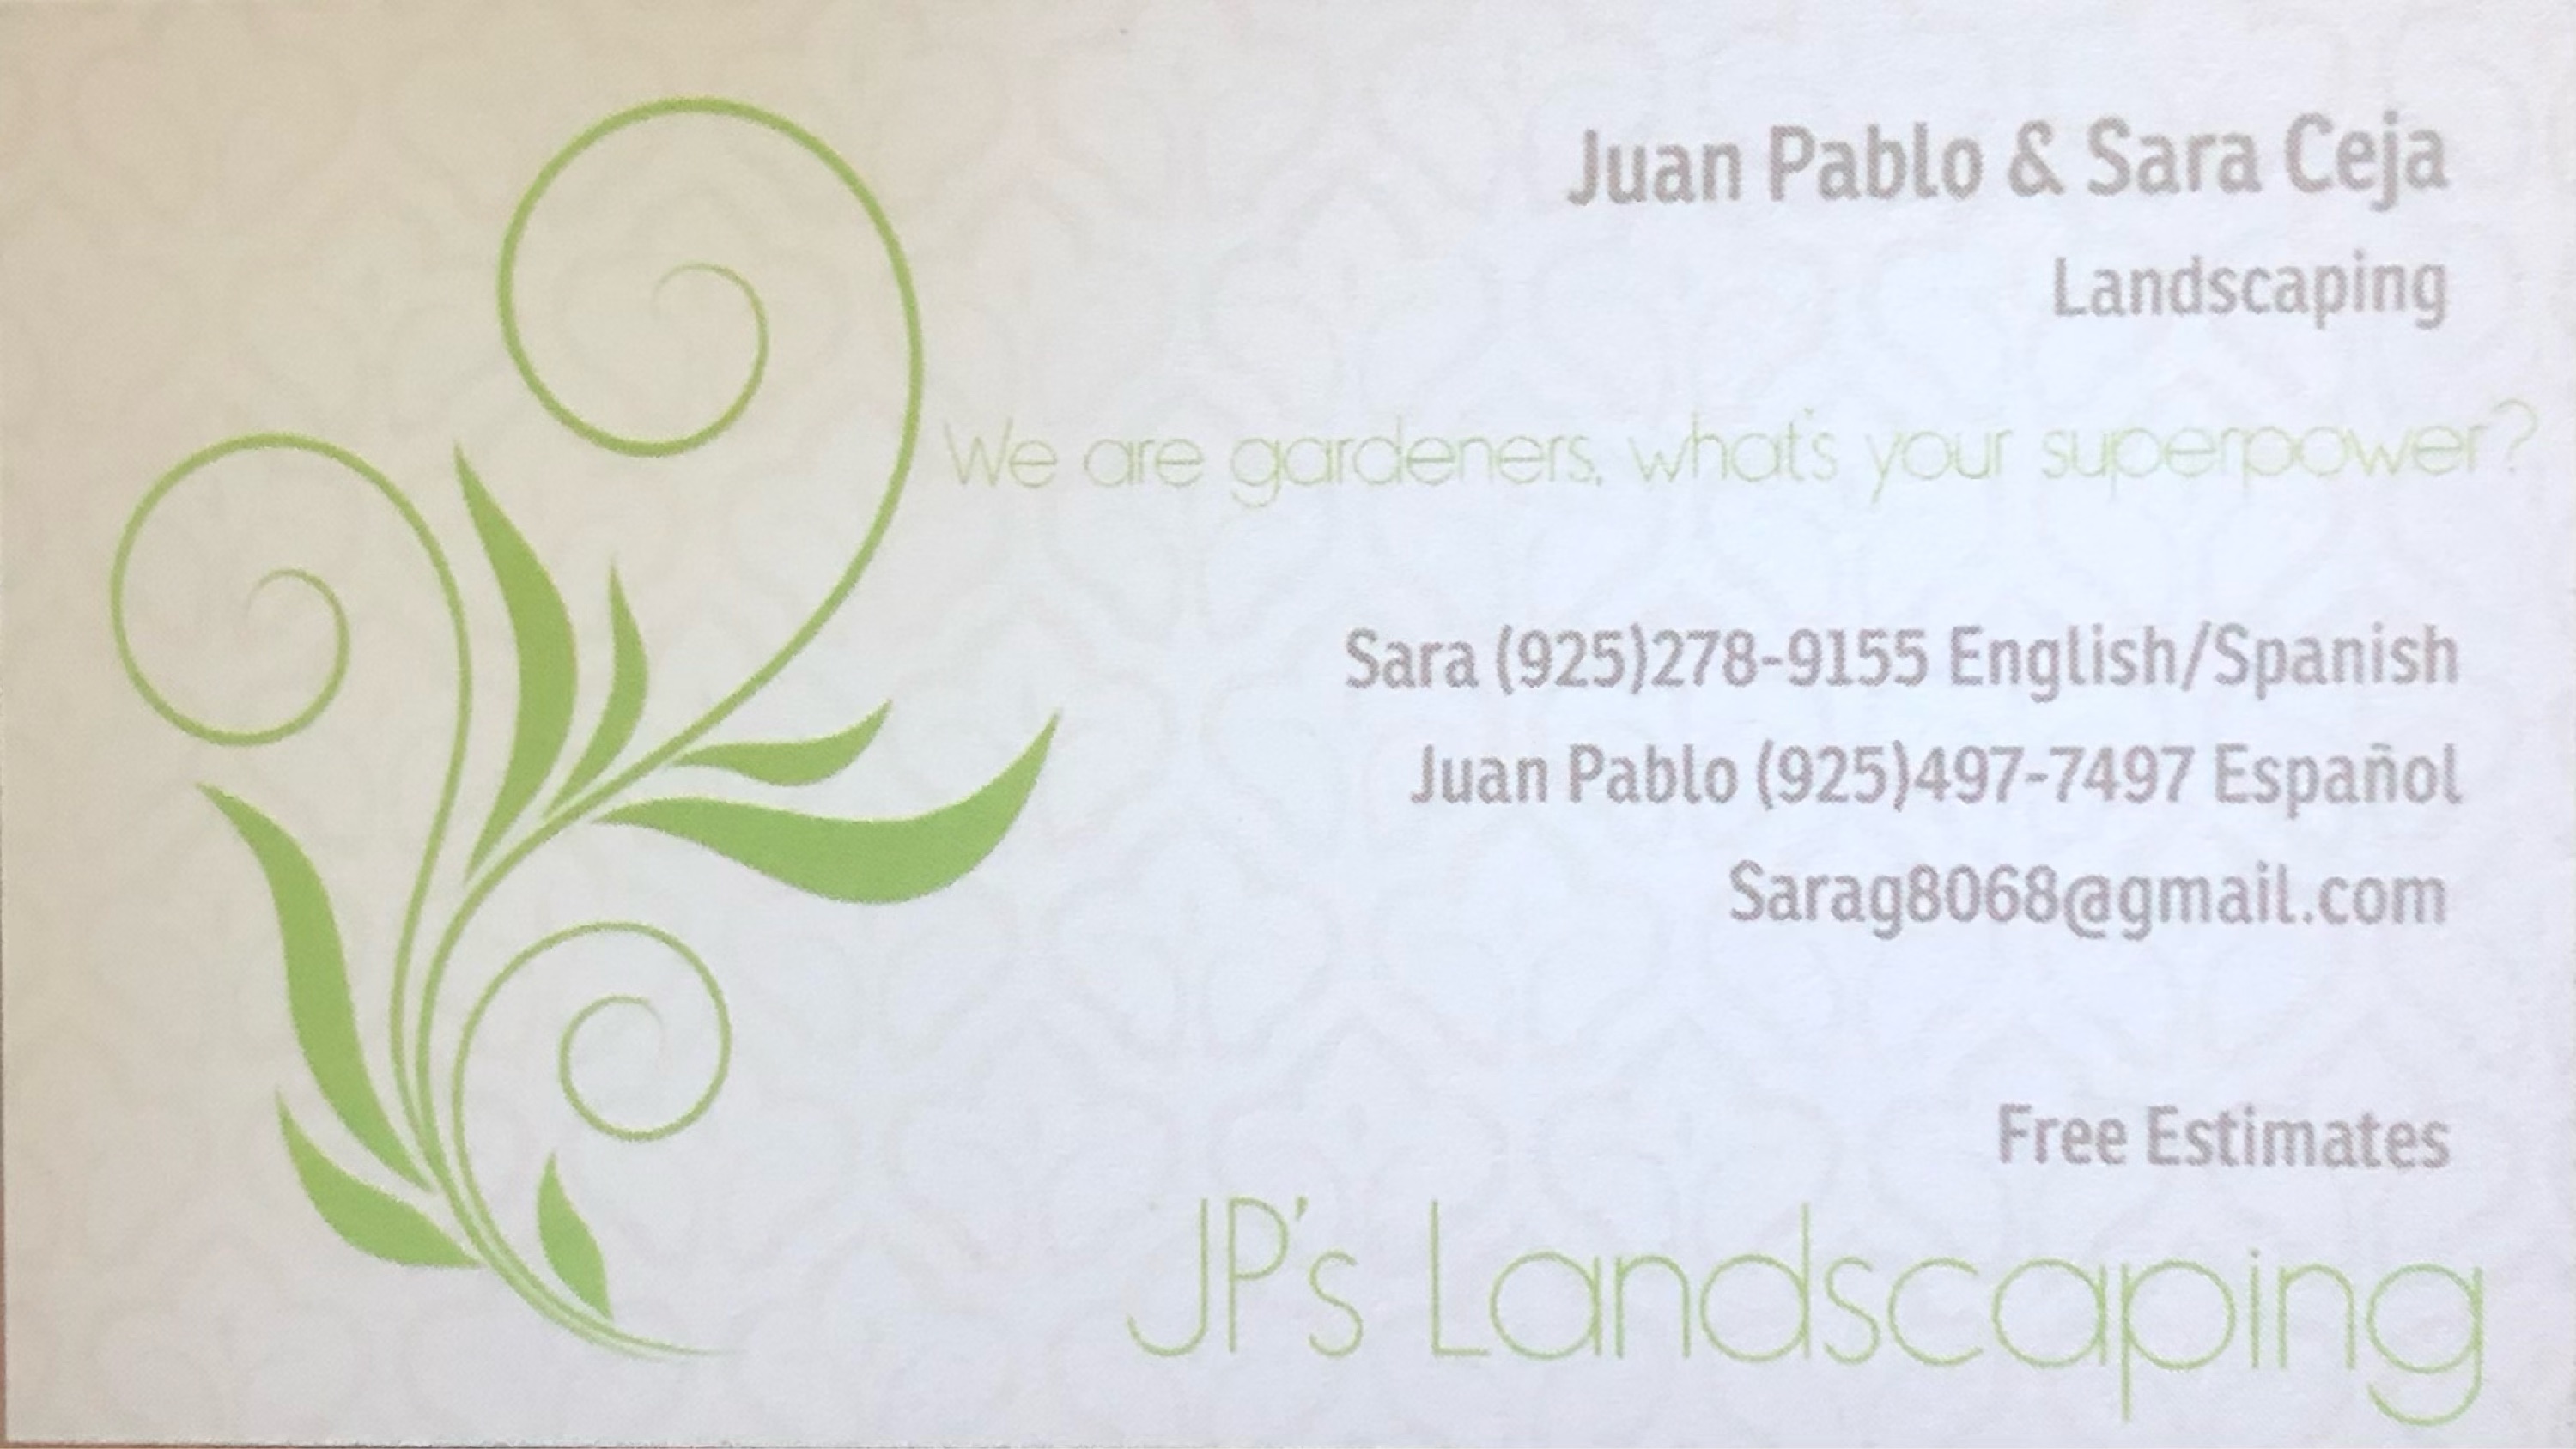 JP's Landscaping - Unlicensed Contractor Logo